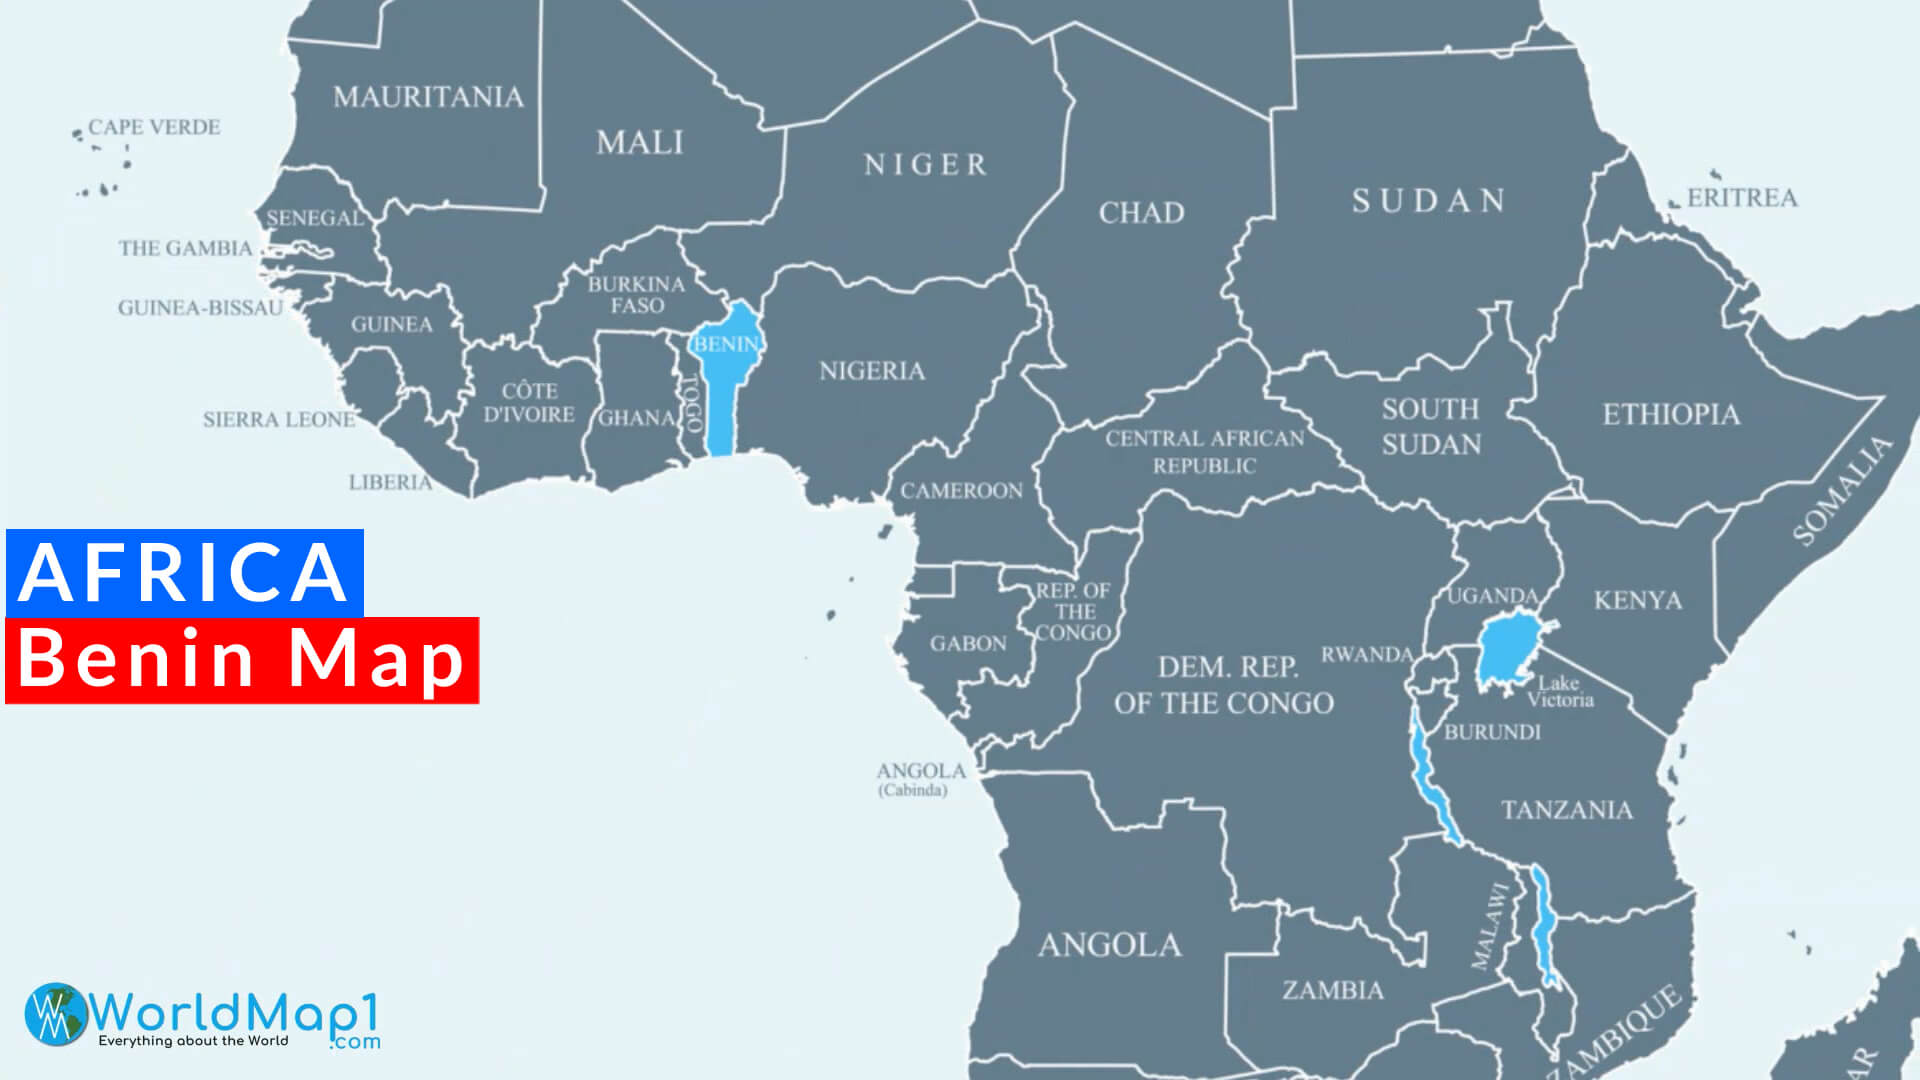 Africa Benin Map